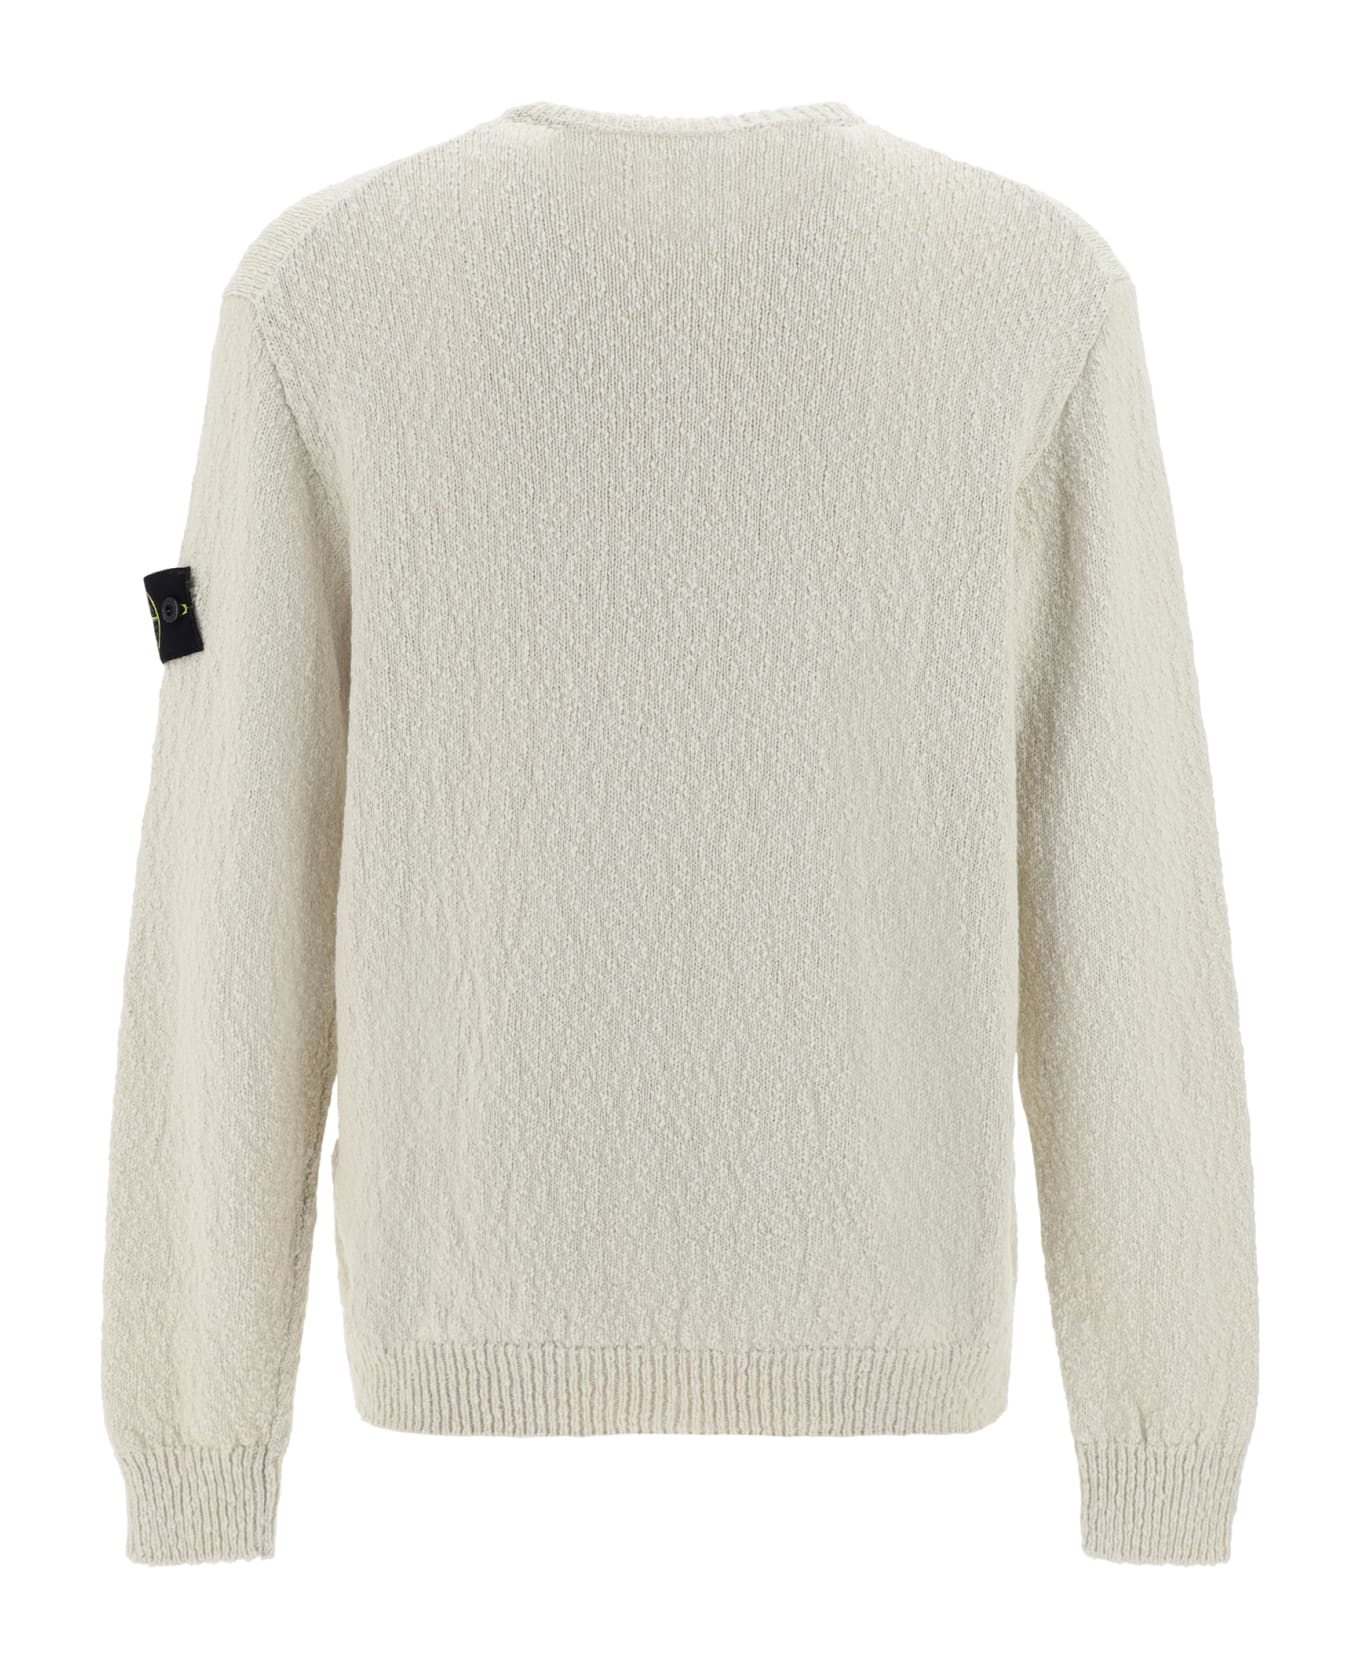 Stone Island Sweater - BEIGE